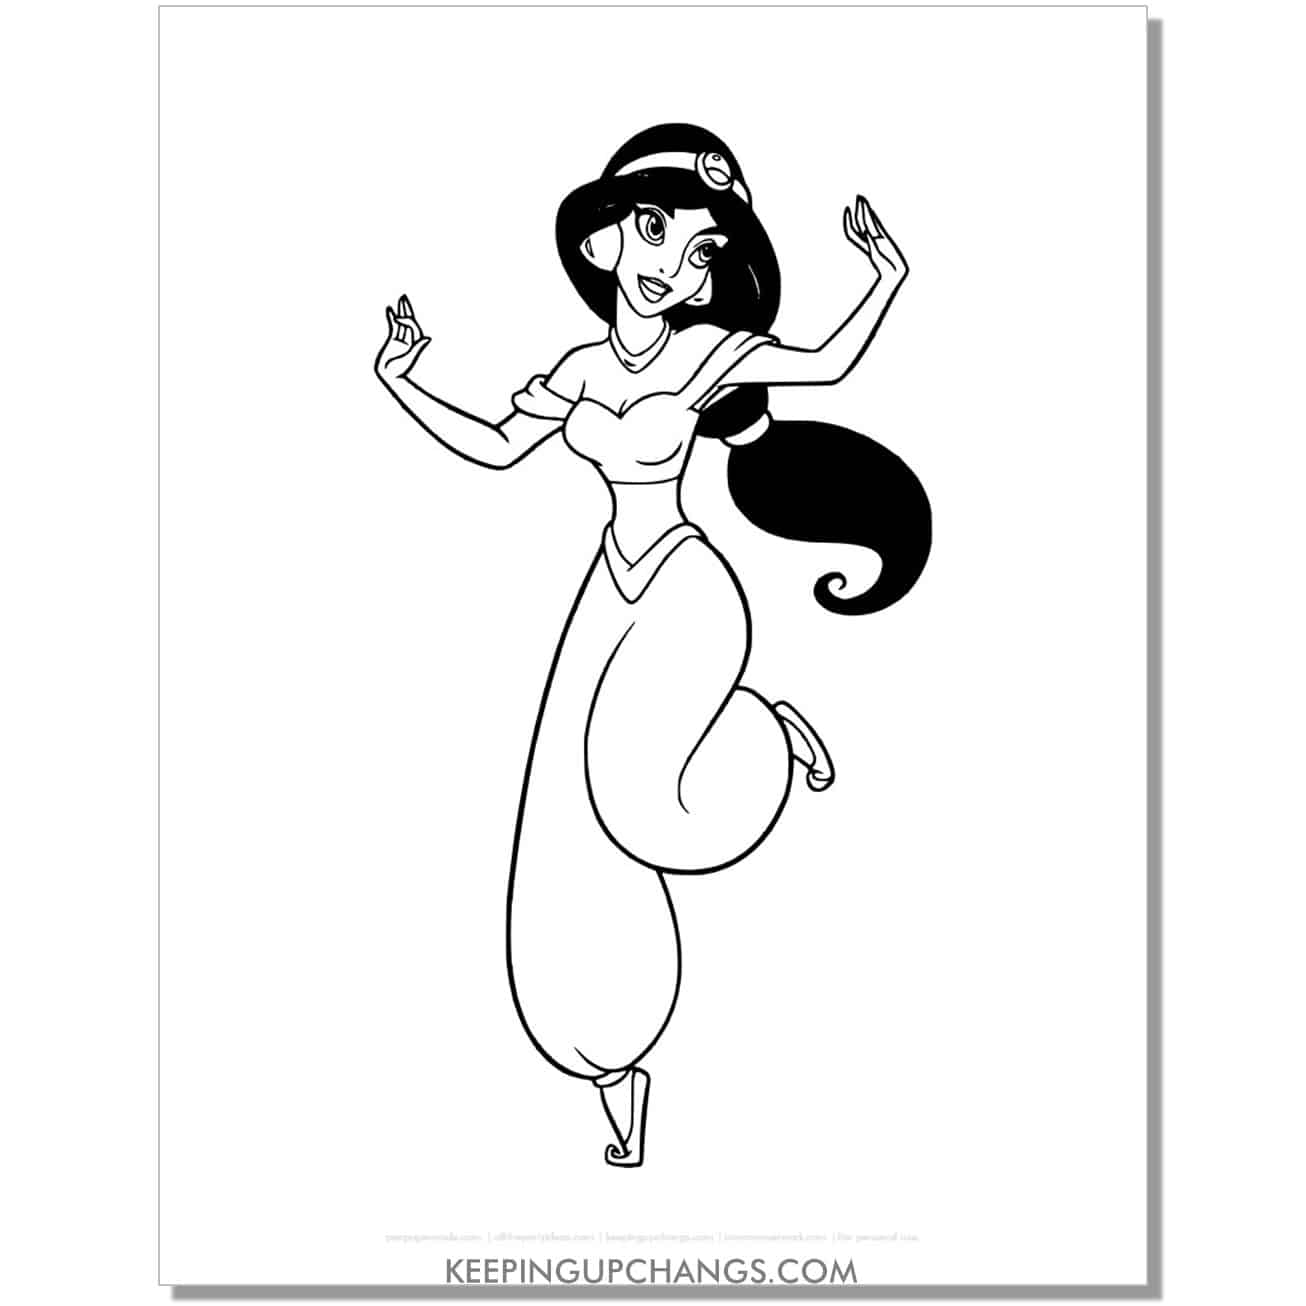 jasmine dancing coloring page, sheet.